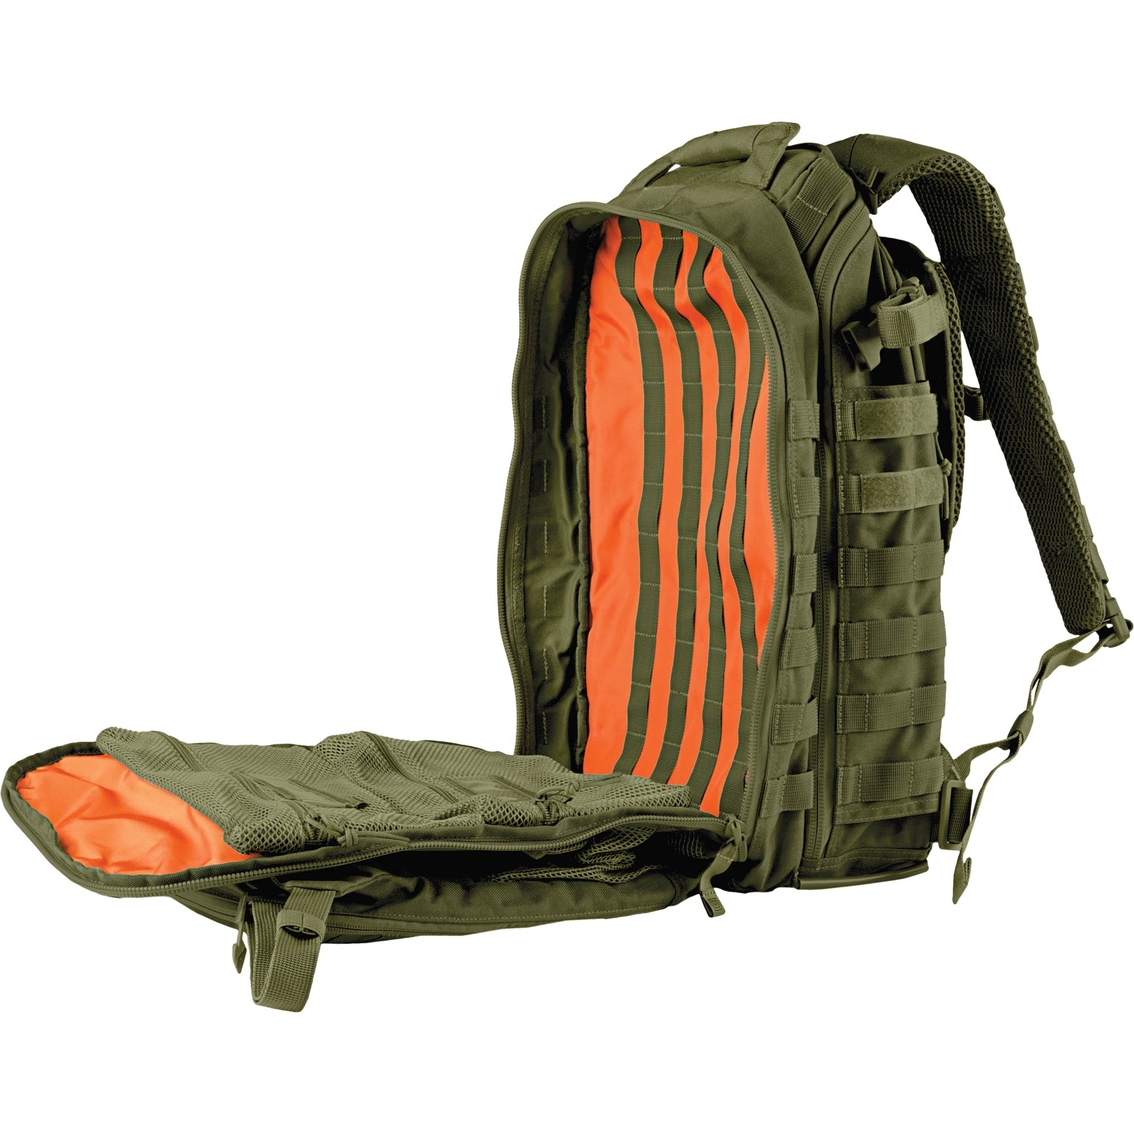 5.11 All Hazards Prime Backpack - Image 4 of 5